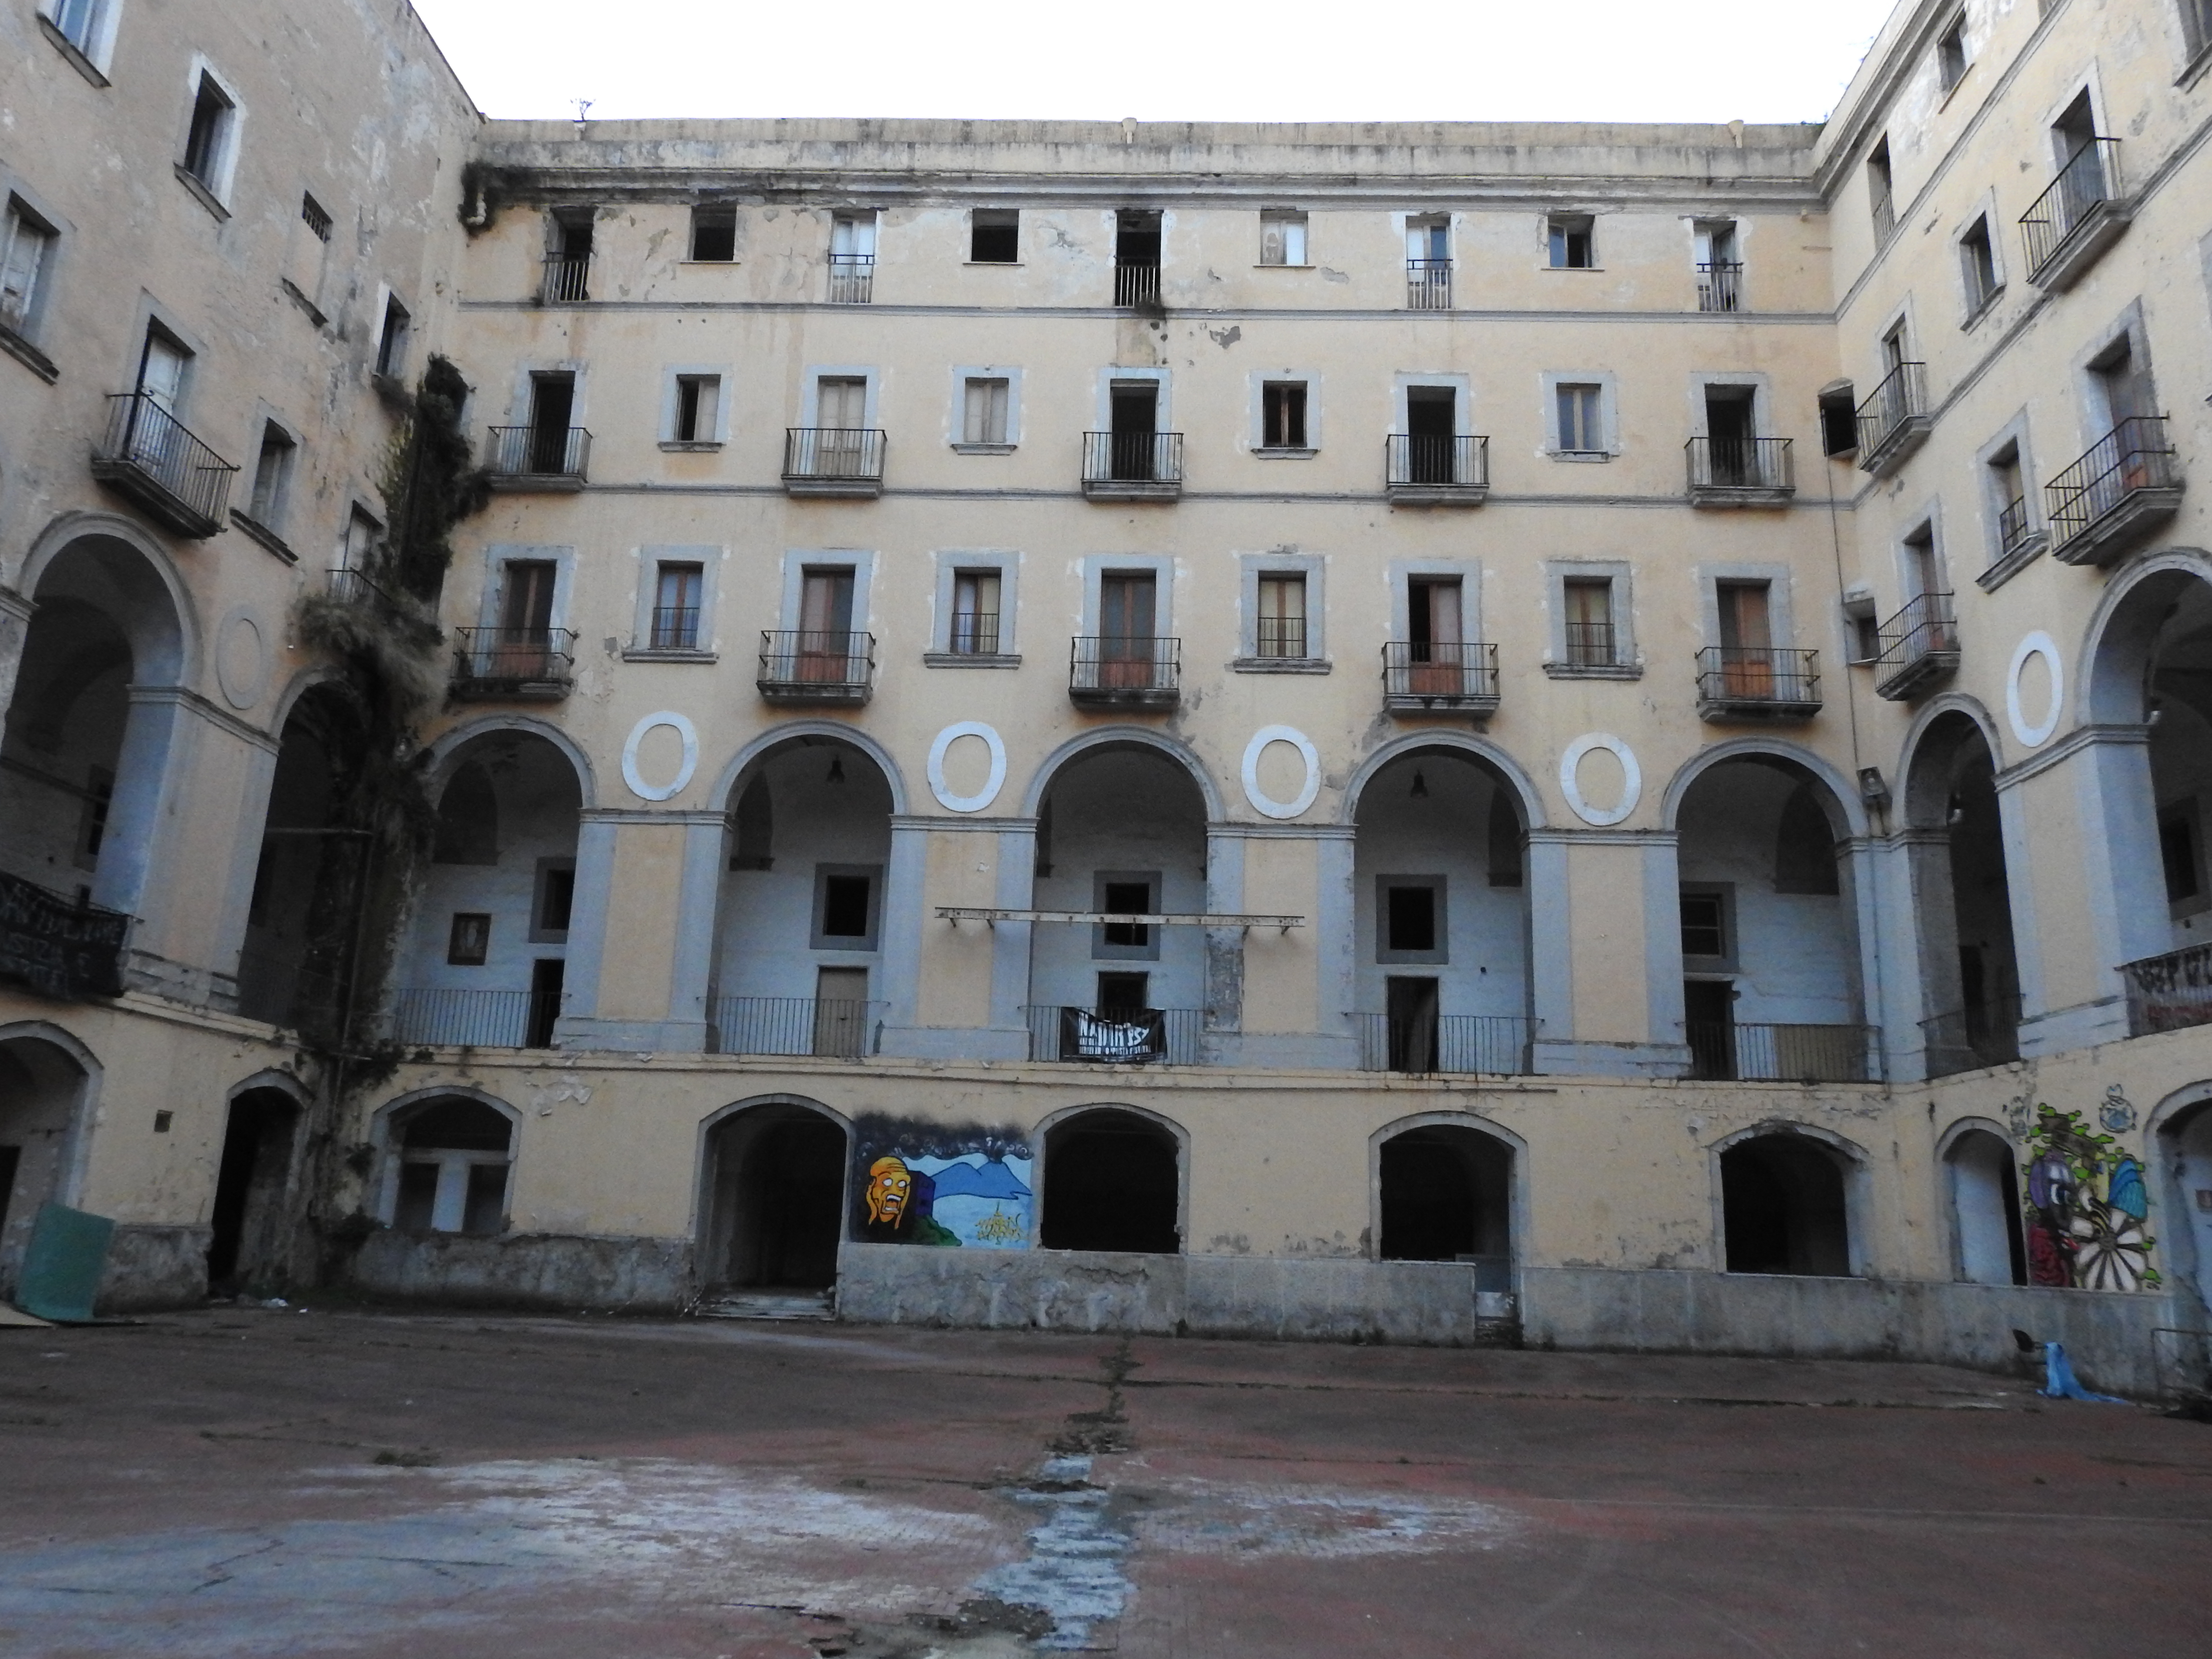 The ex Conveto delle Cappuccinelle, courtyard